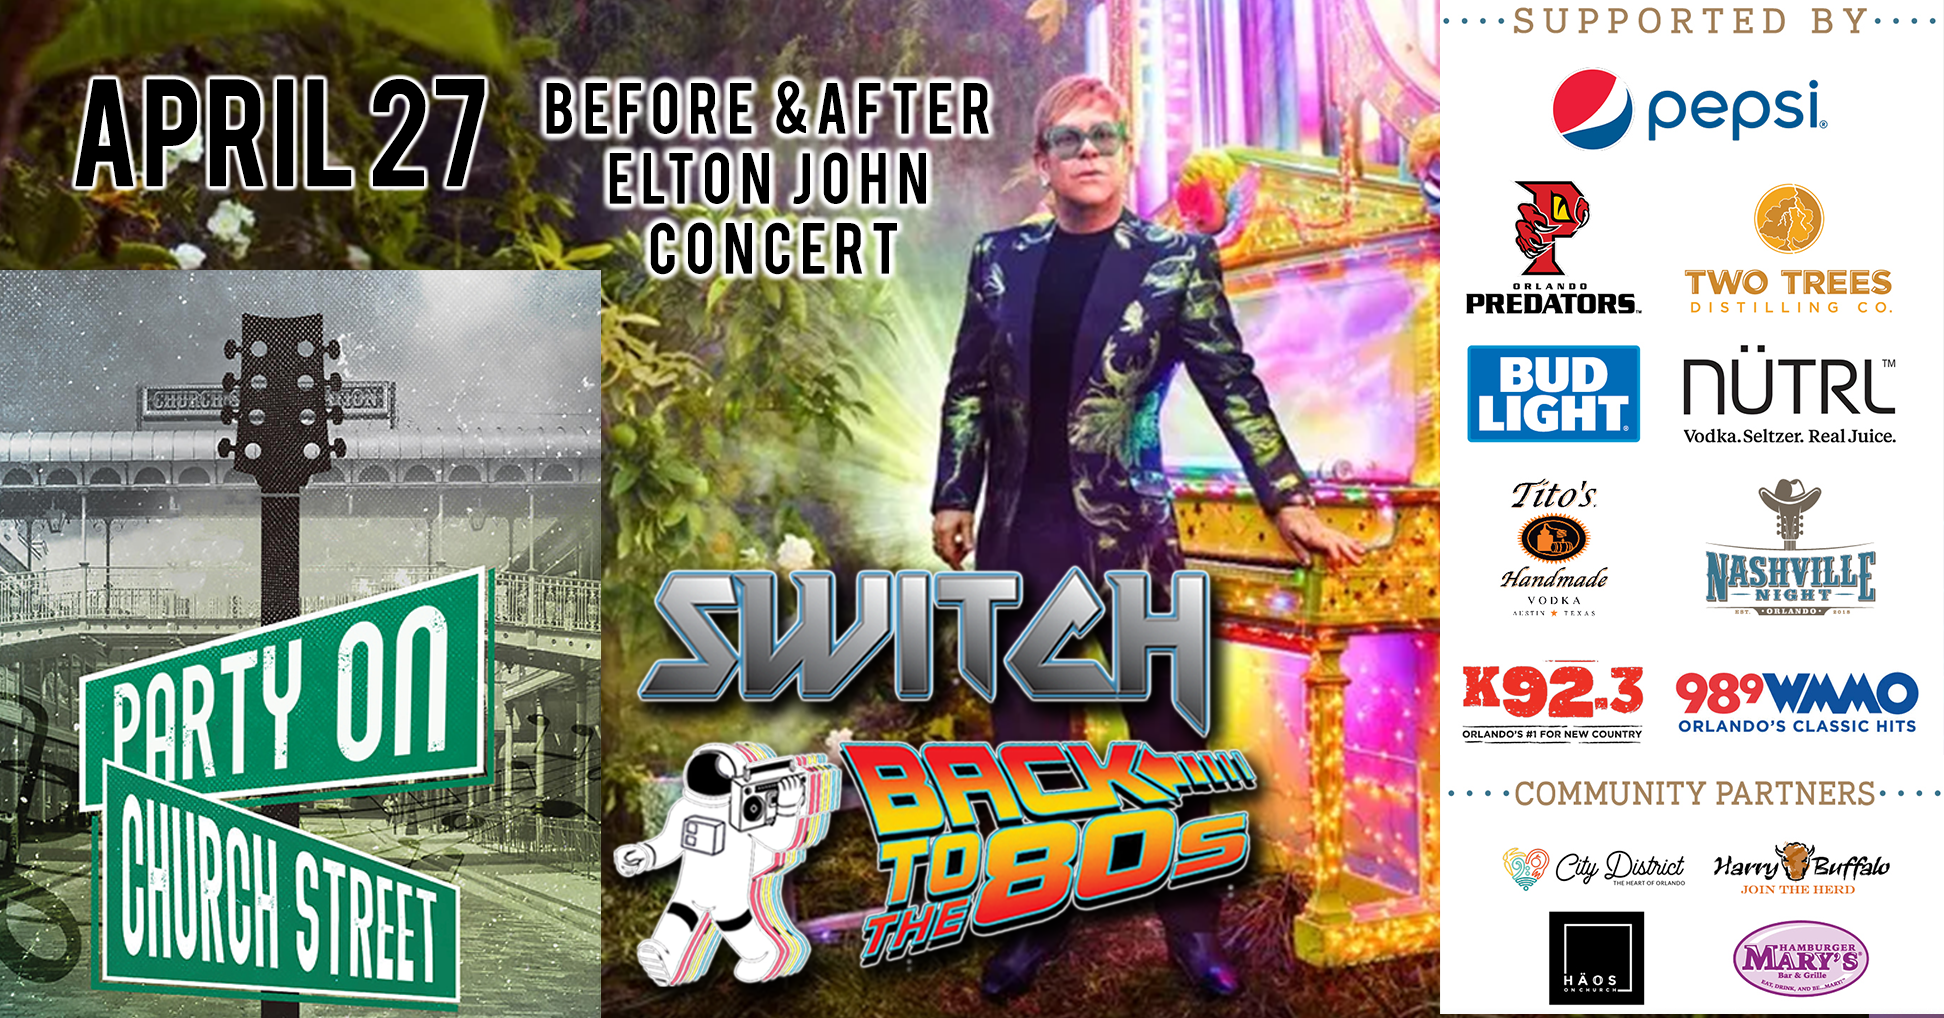 SWITCH @ Elton John Concert - Church Street - Harry Buffalo